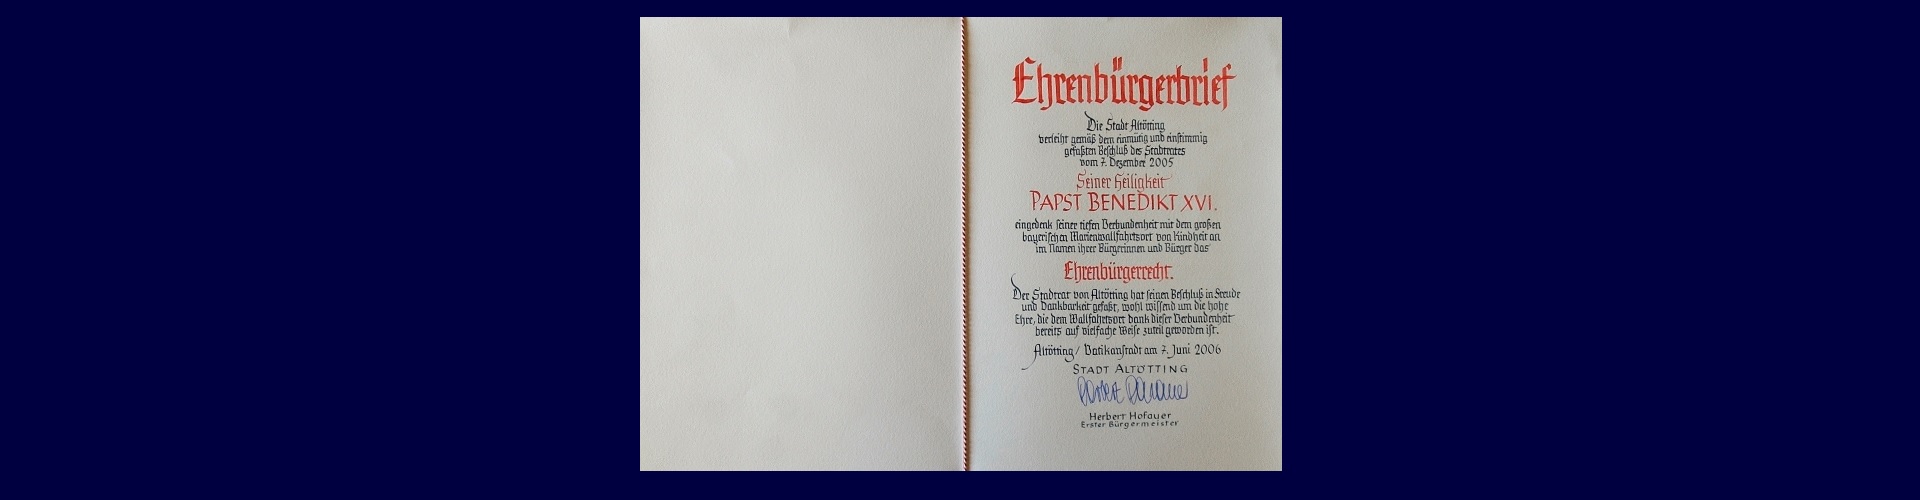 Der Ehrenbürgerbrief der Stadt Altötting an Papst Benedikt XVI.